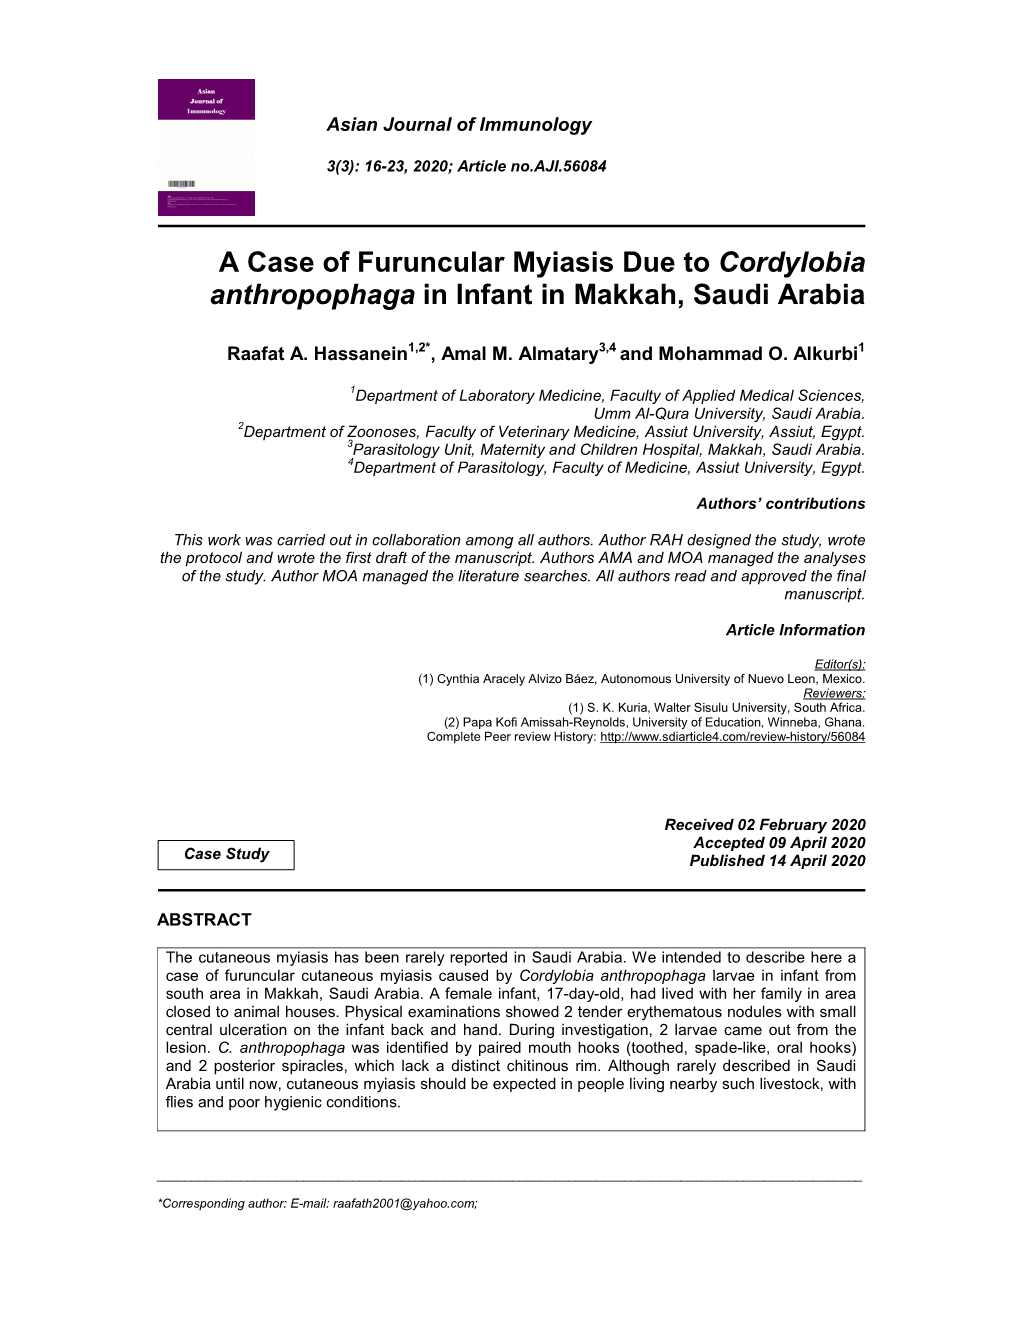 A Case of Furuncular Myiasis Due to Cordylobia Anthropophaga in Infant in Makkah, Saudi Arabia